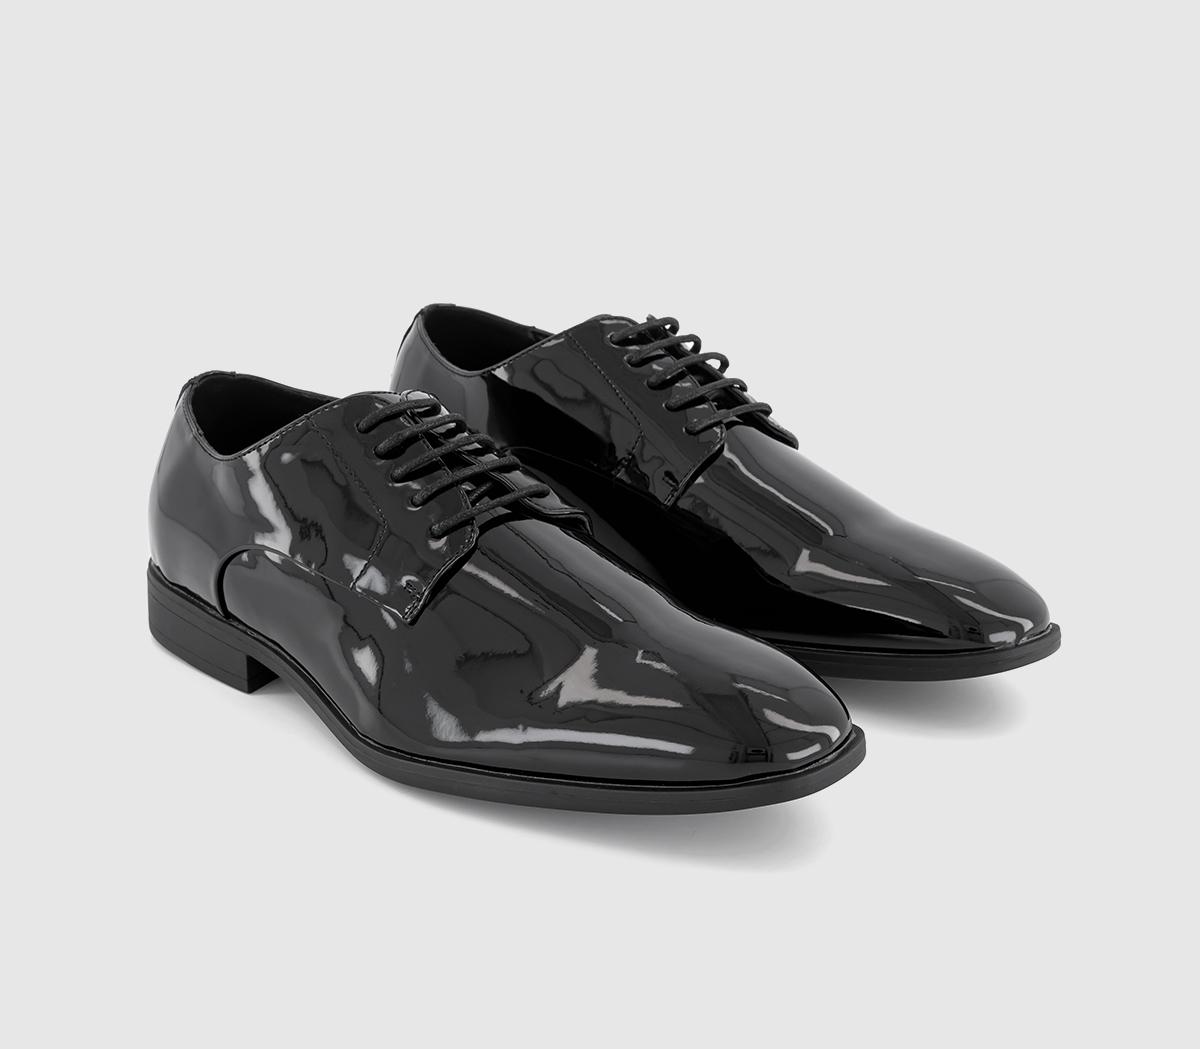 OFFICE Mens Moreland Patent Derby Shoes Black, 11